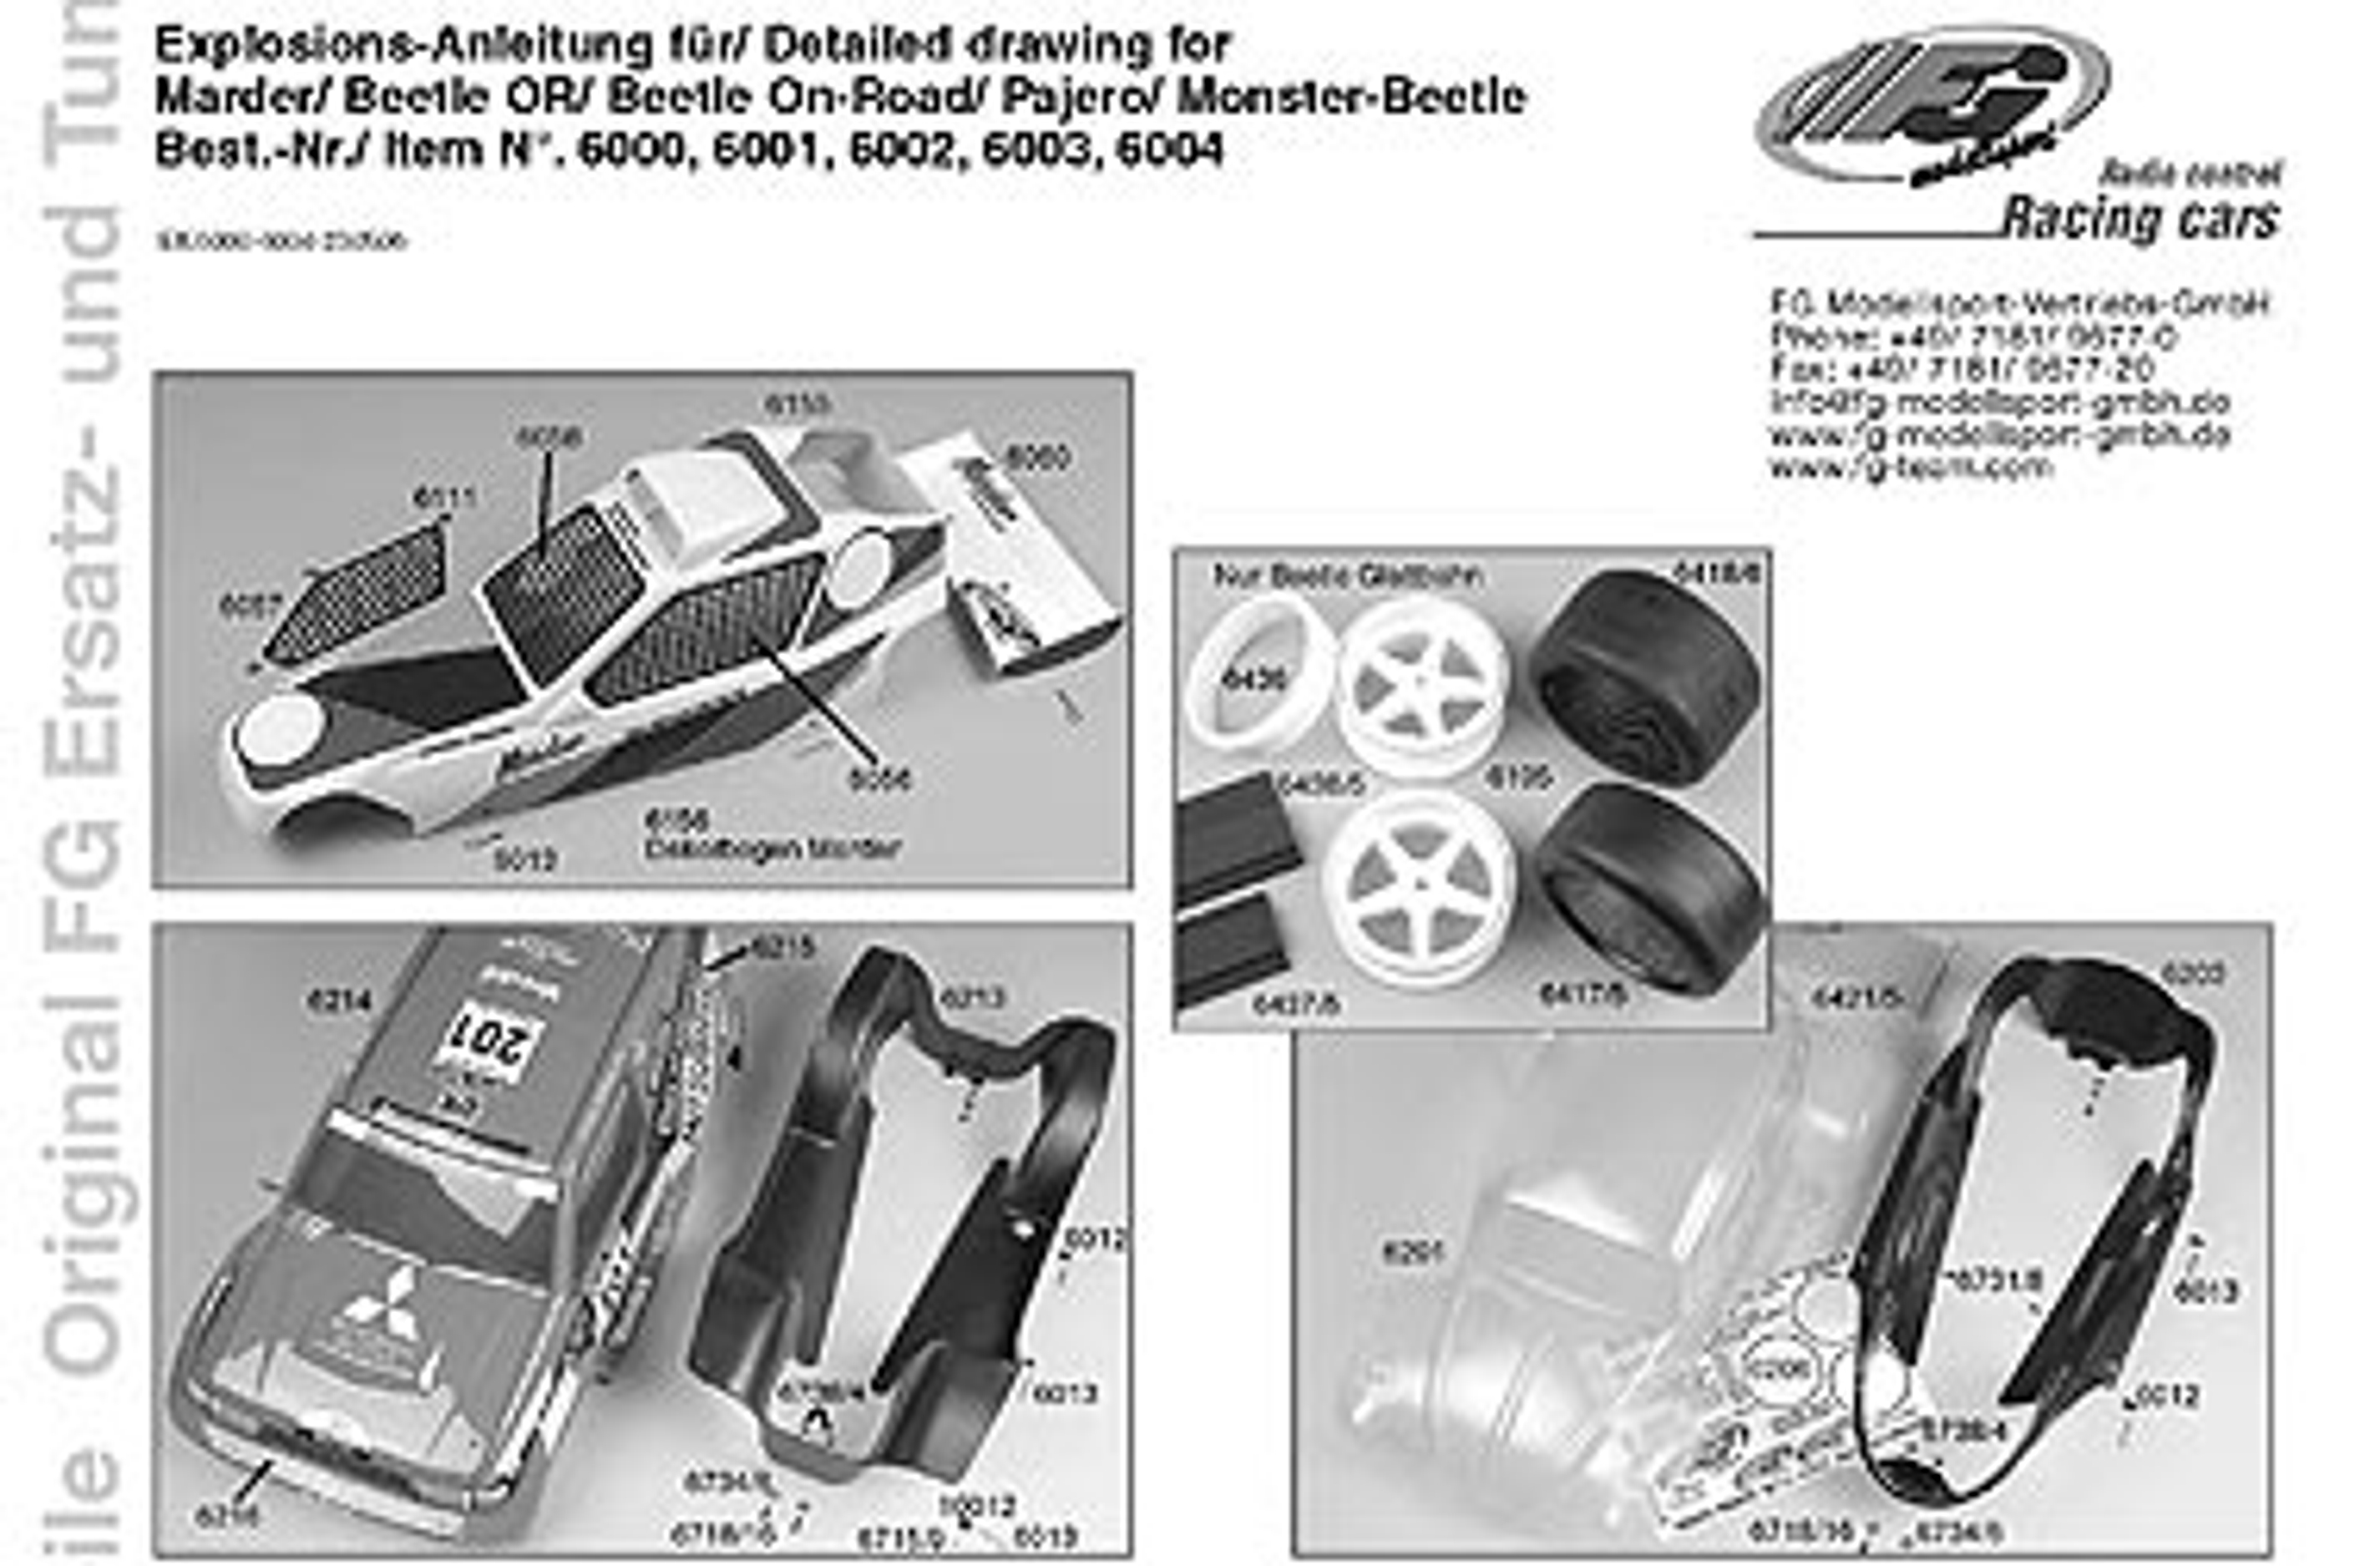 y0959 FG manuals set 2WD Marder / Beetle OR / Beetle On-Road / Monster Beetle, set